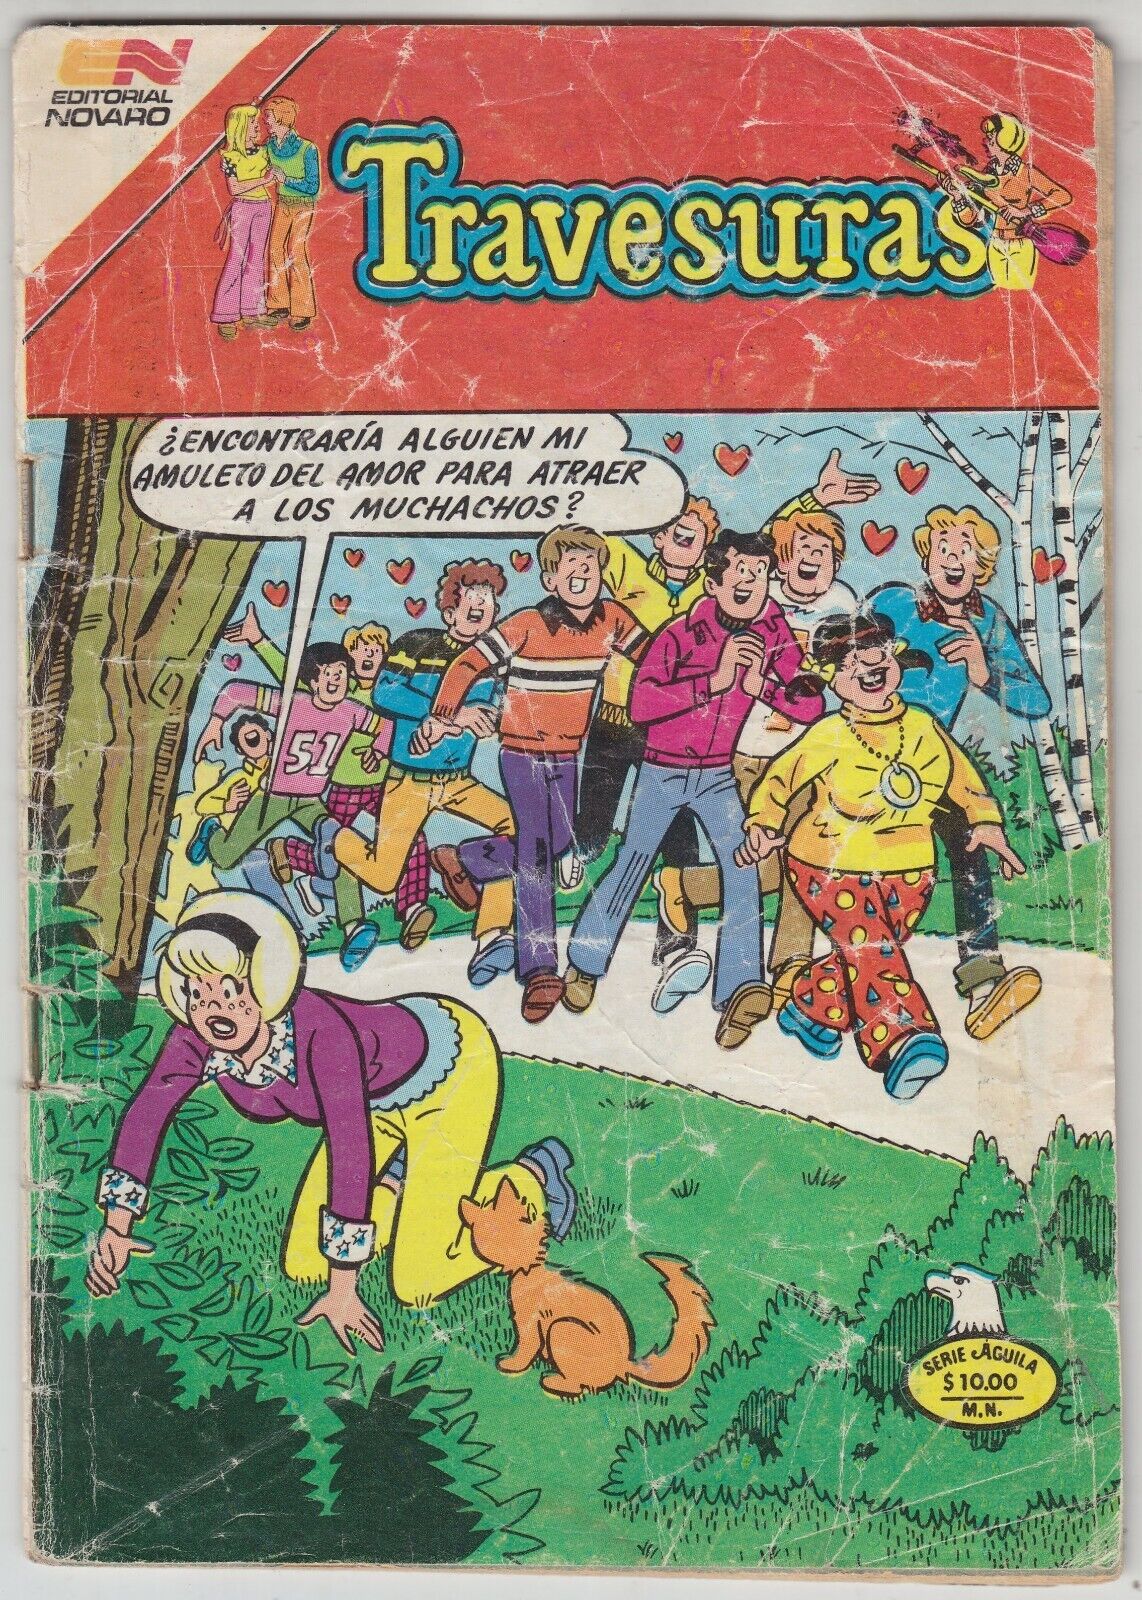 Travesuras #2-240 Novaro Mexican Archie Comics 1983 Sabrina The Teenage Witch